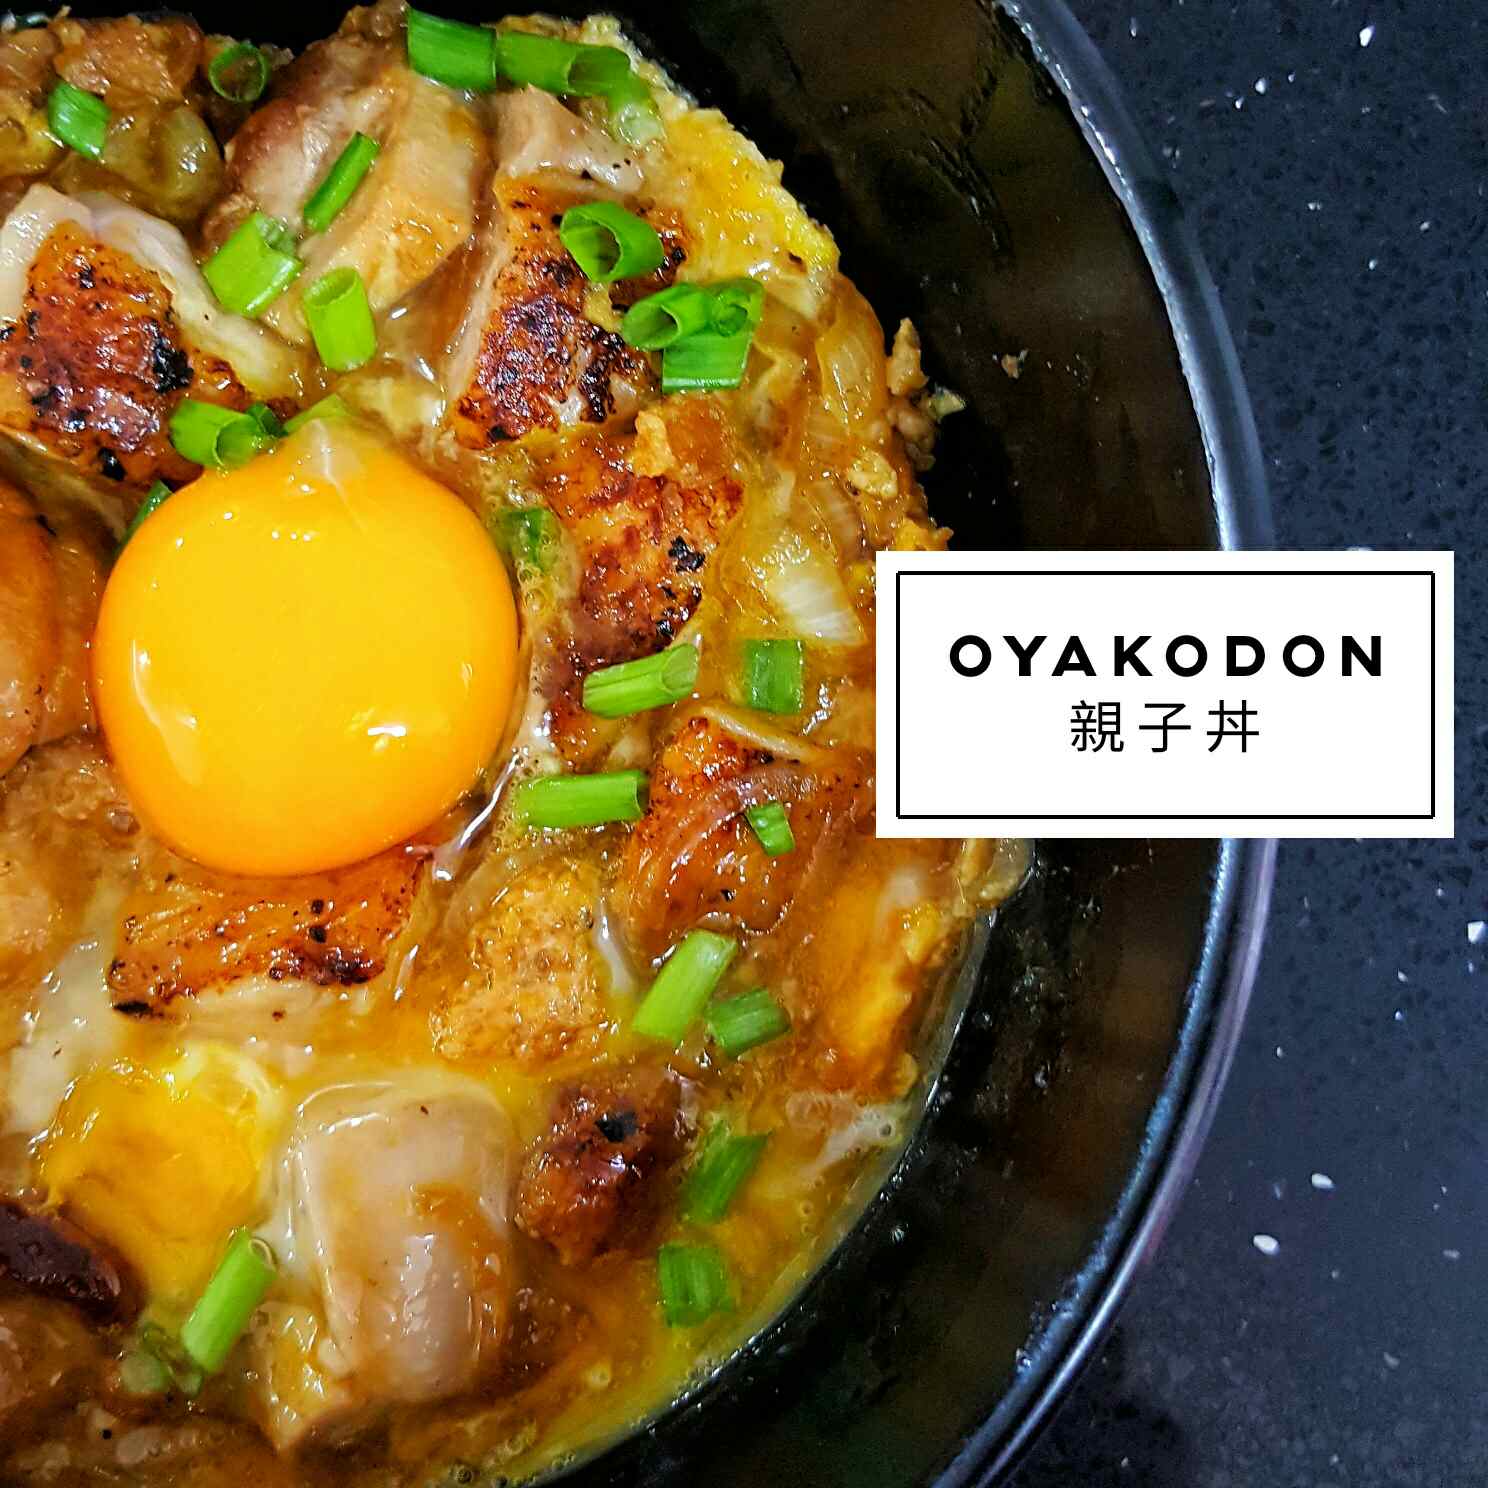 OyakoDon - The Authentic Japanese Way - eckitchensg